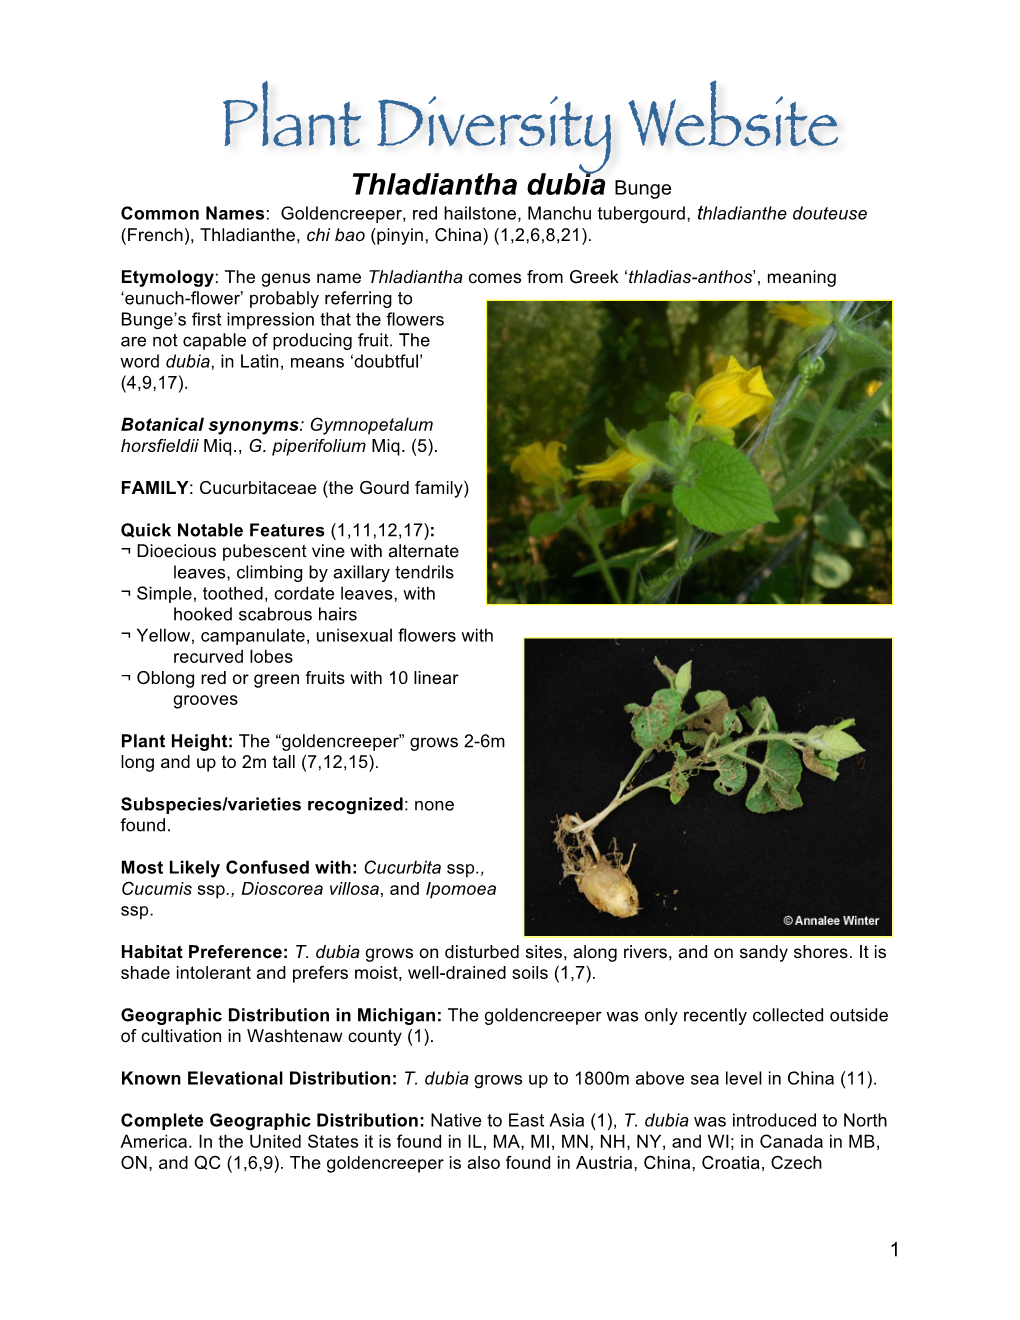 Thladiantha Dubia Bunge